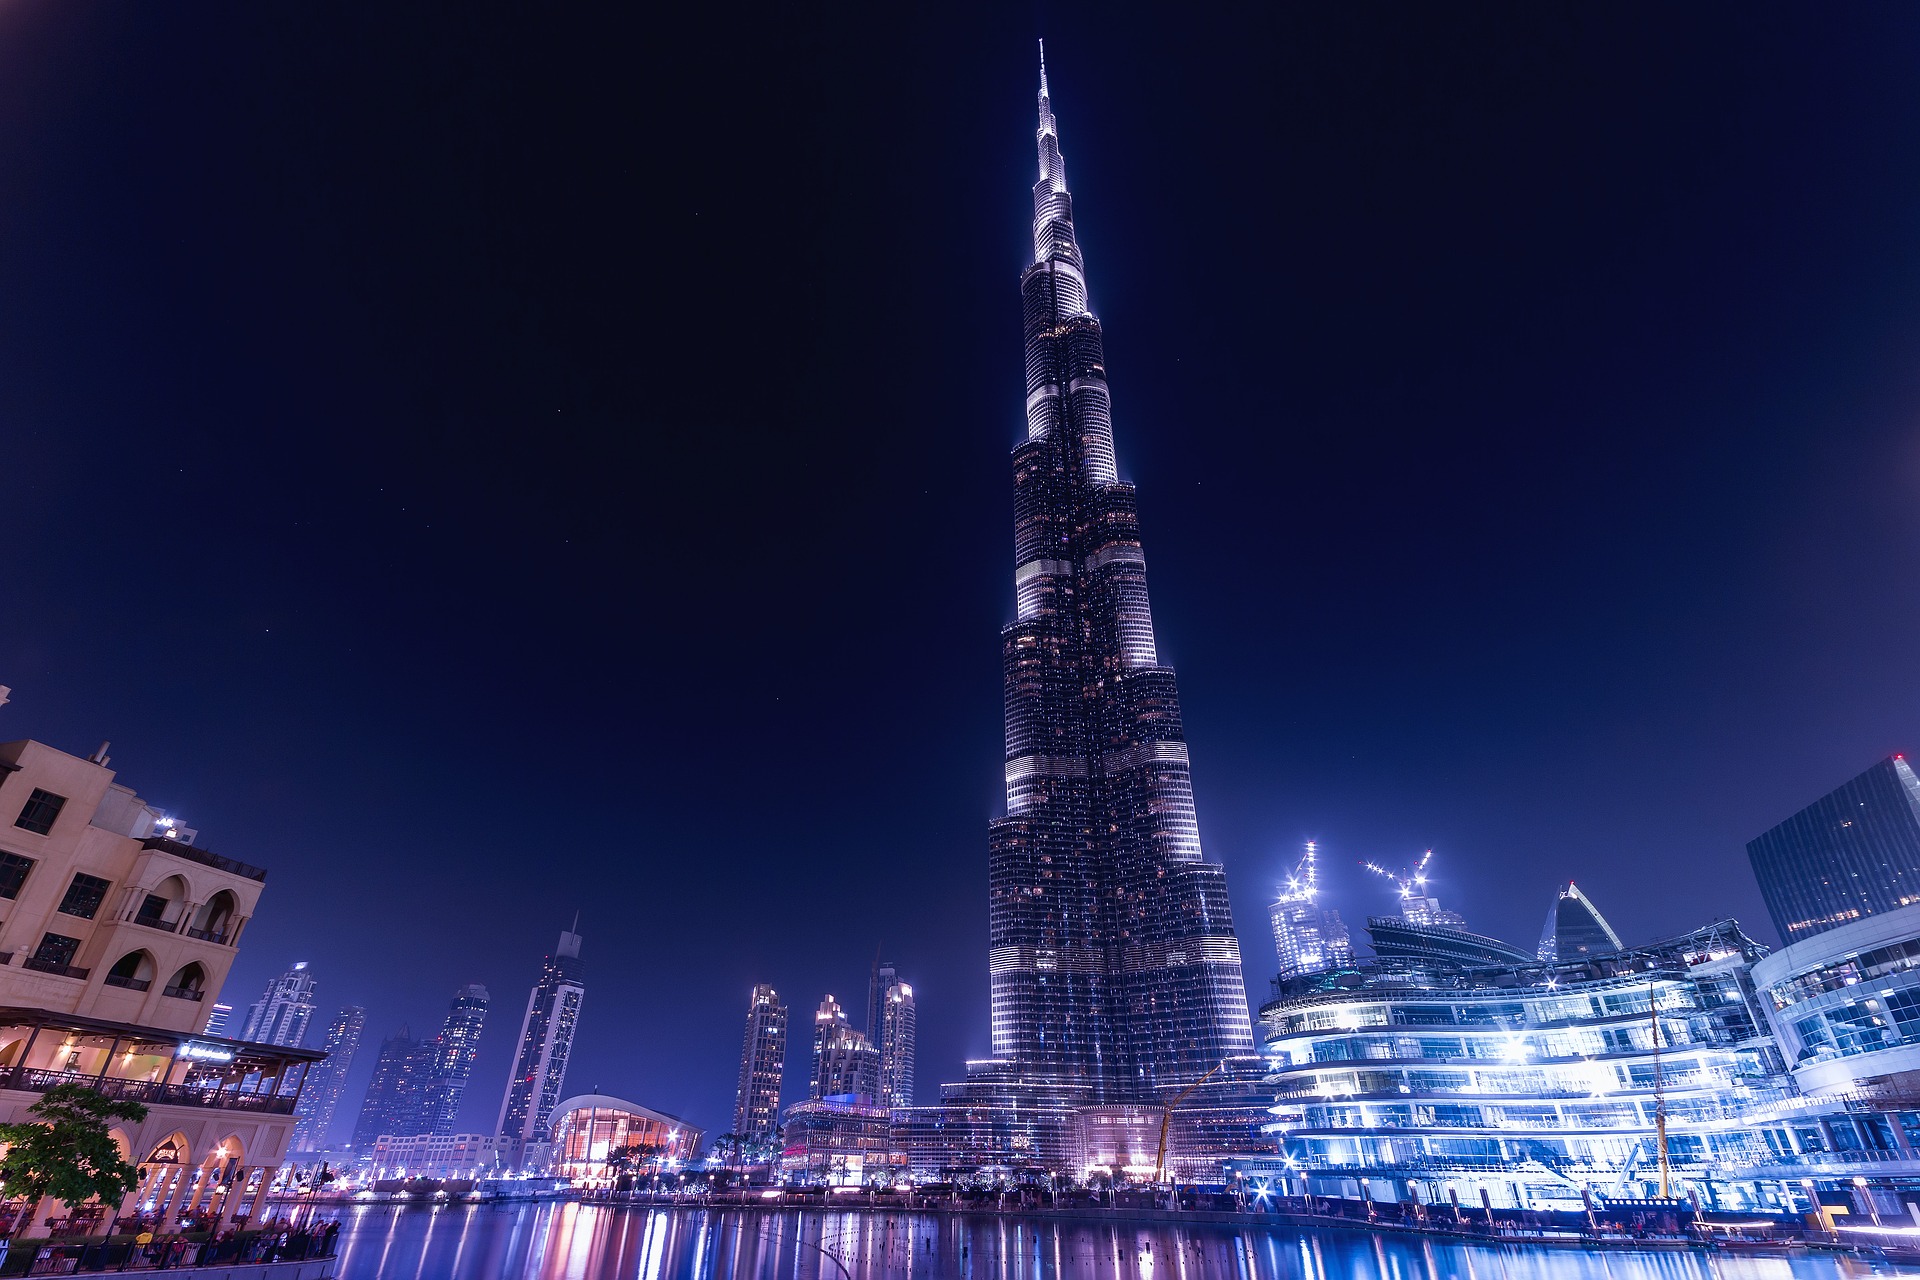 Dubai's tallest tower: Burj Khalifa